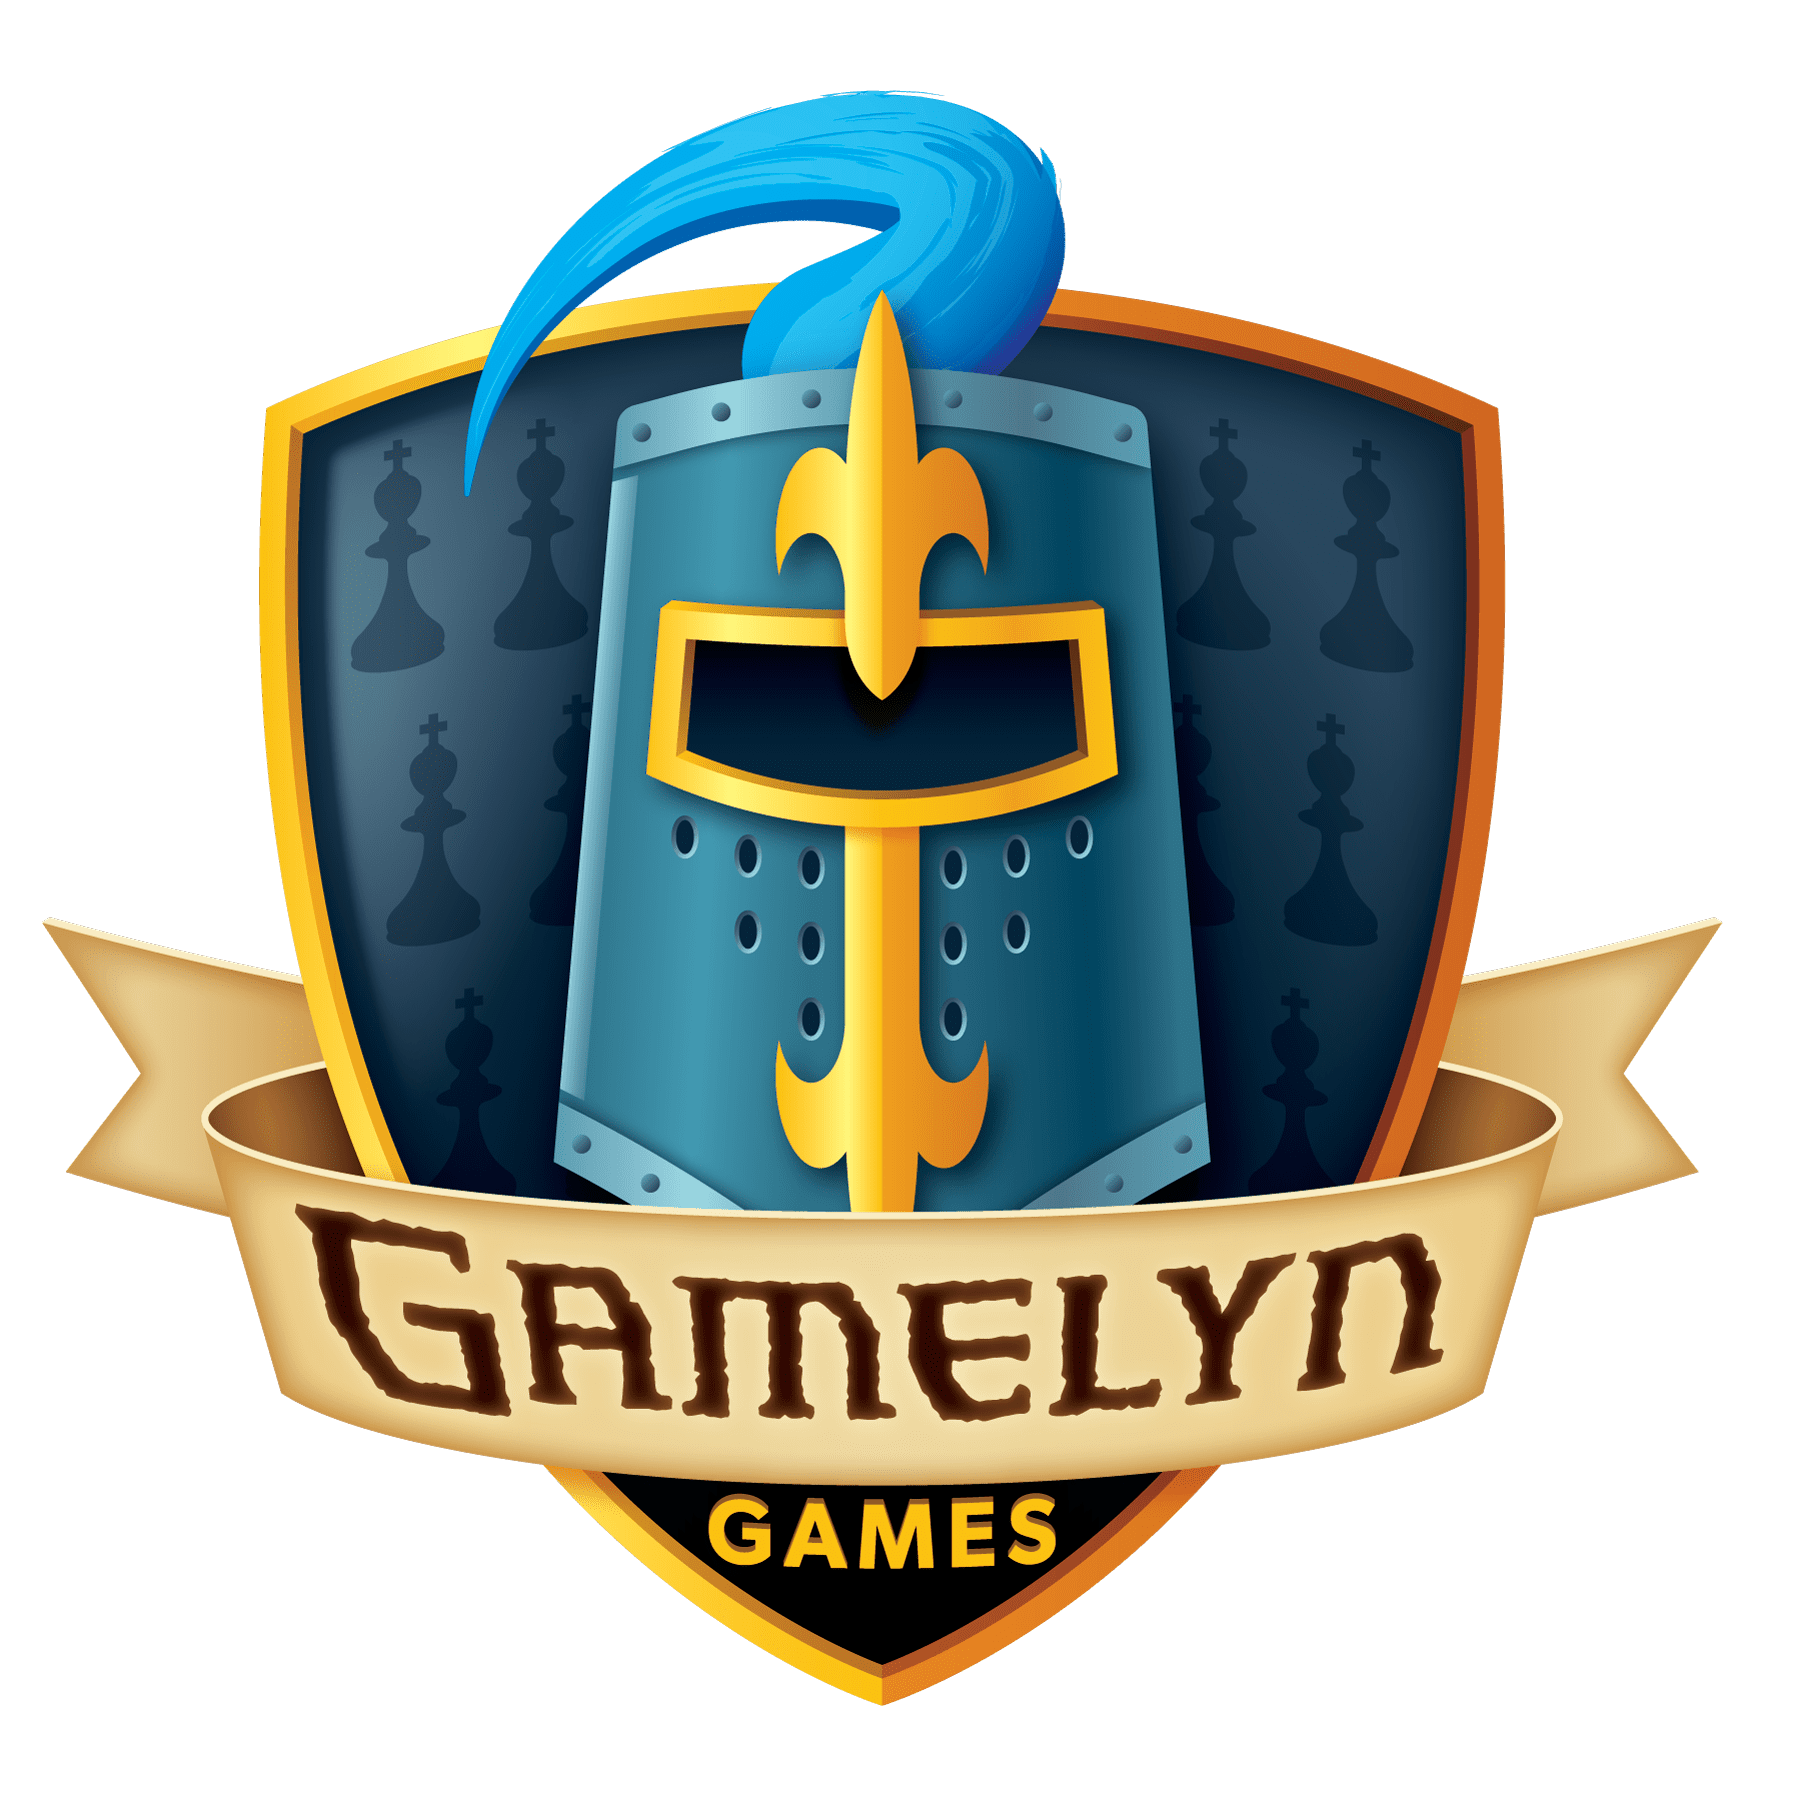 Brand: Gamelyn Games